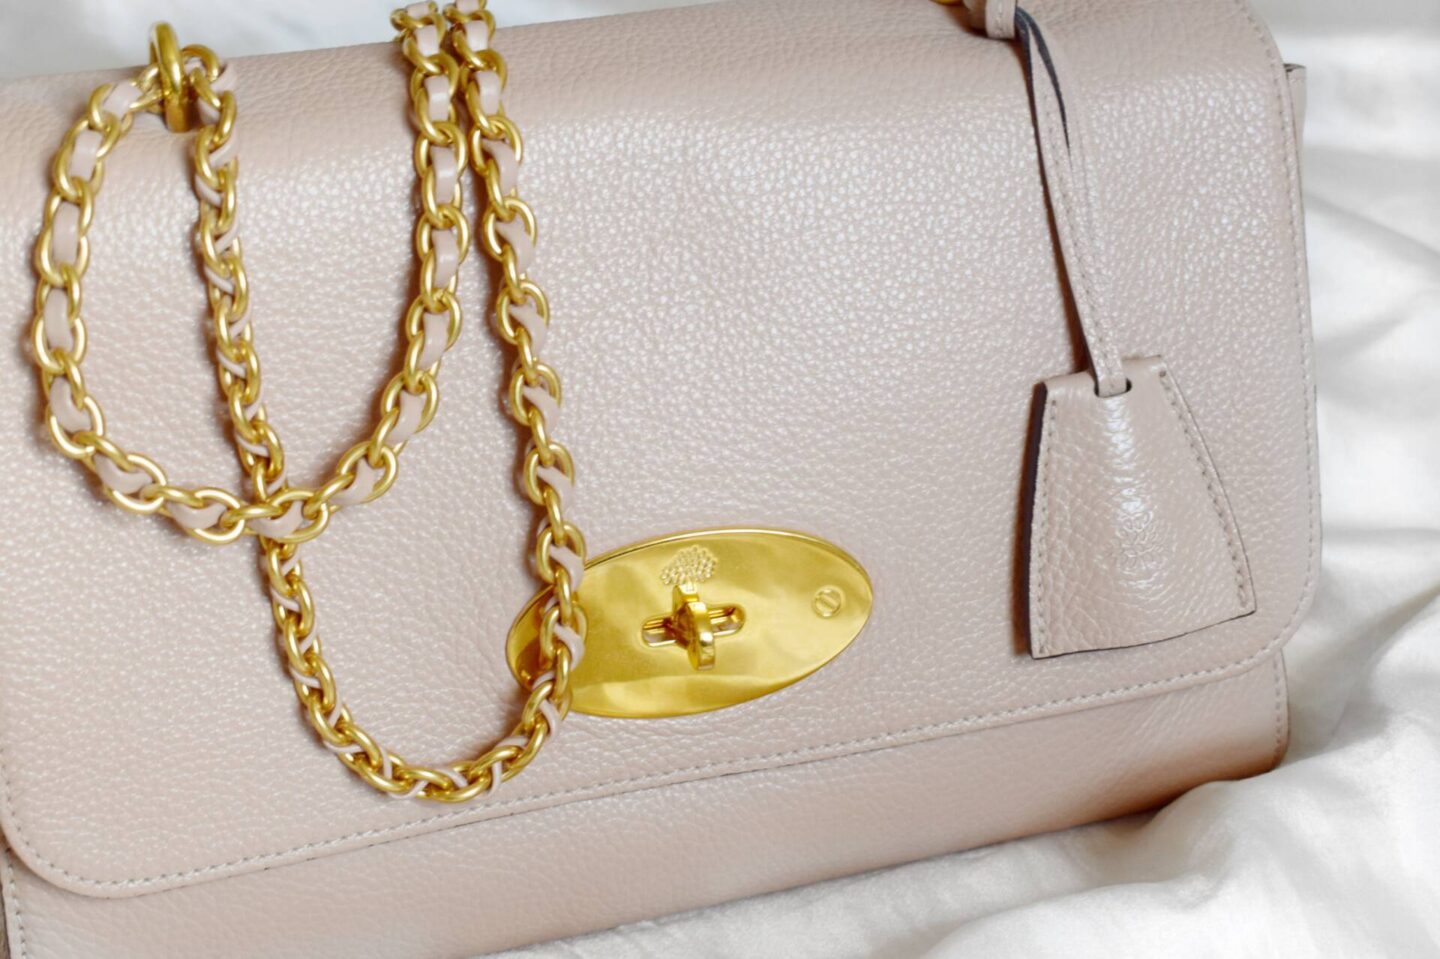 High-end Handbag | Mulberry Lily Review - Midsize Steph